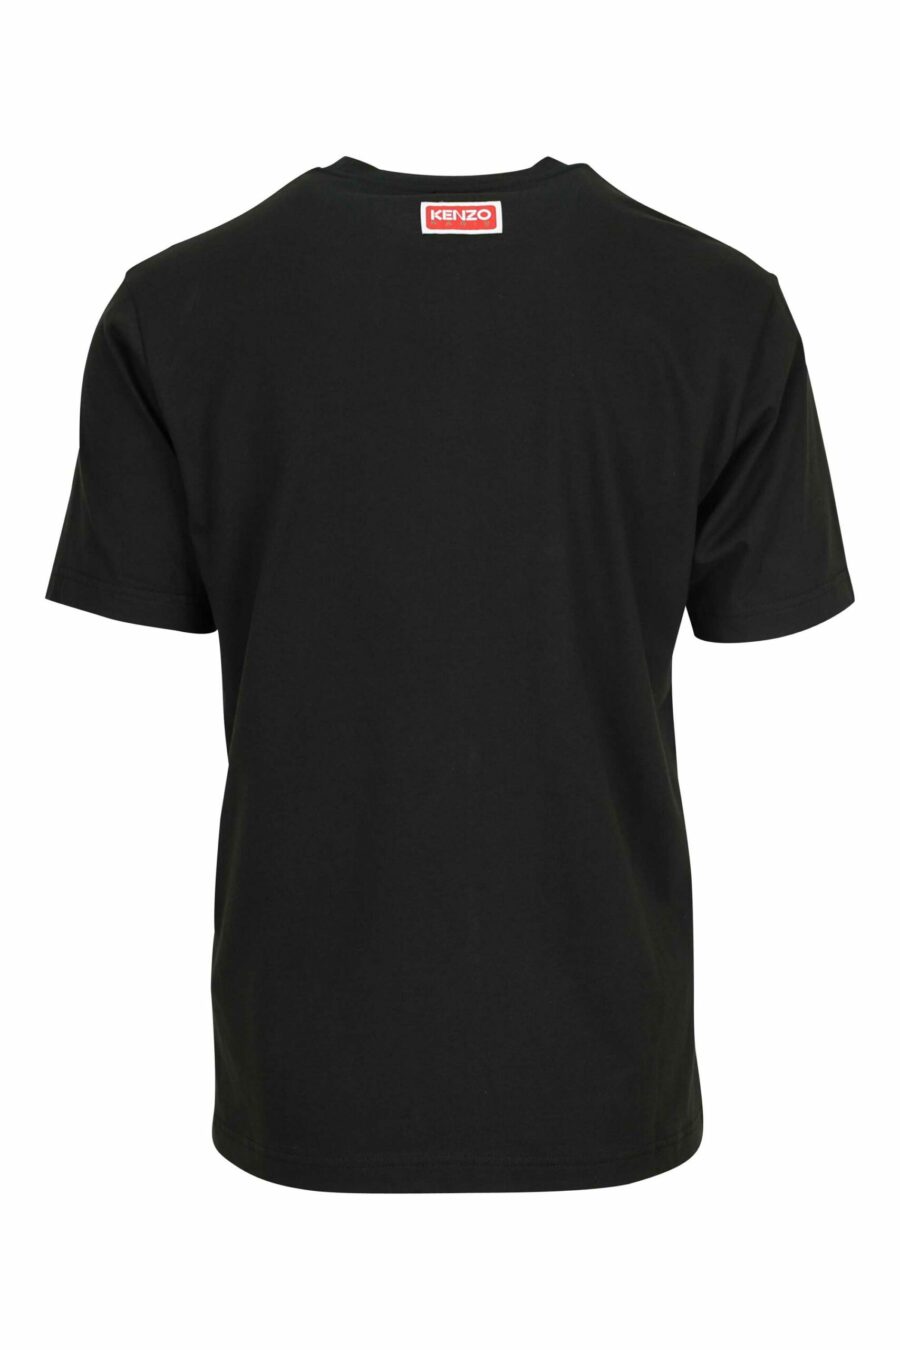 T-shirt noir avec maxilogo "kenzo elephant" - 3612230625624 1 scaled